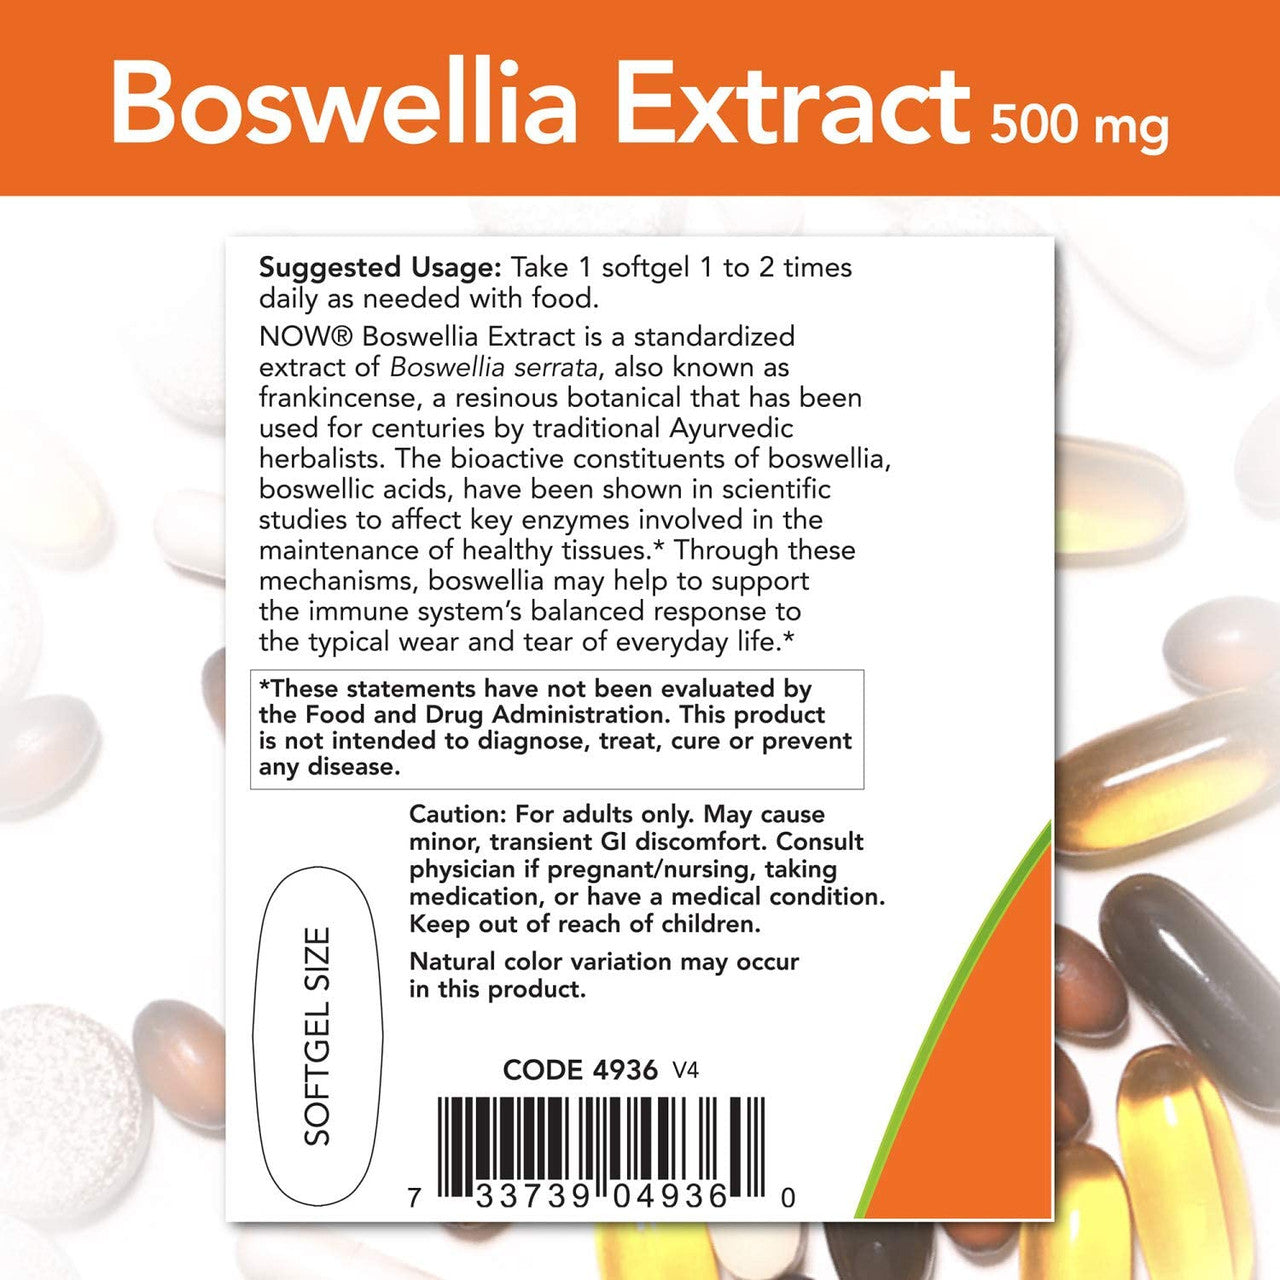 Now Boswellia Extract 500mg directions